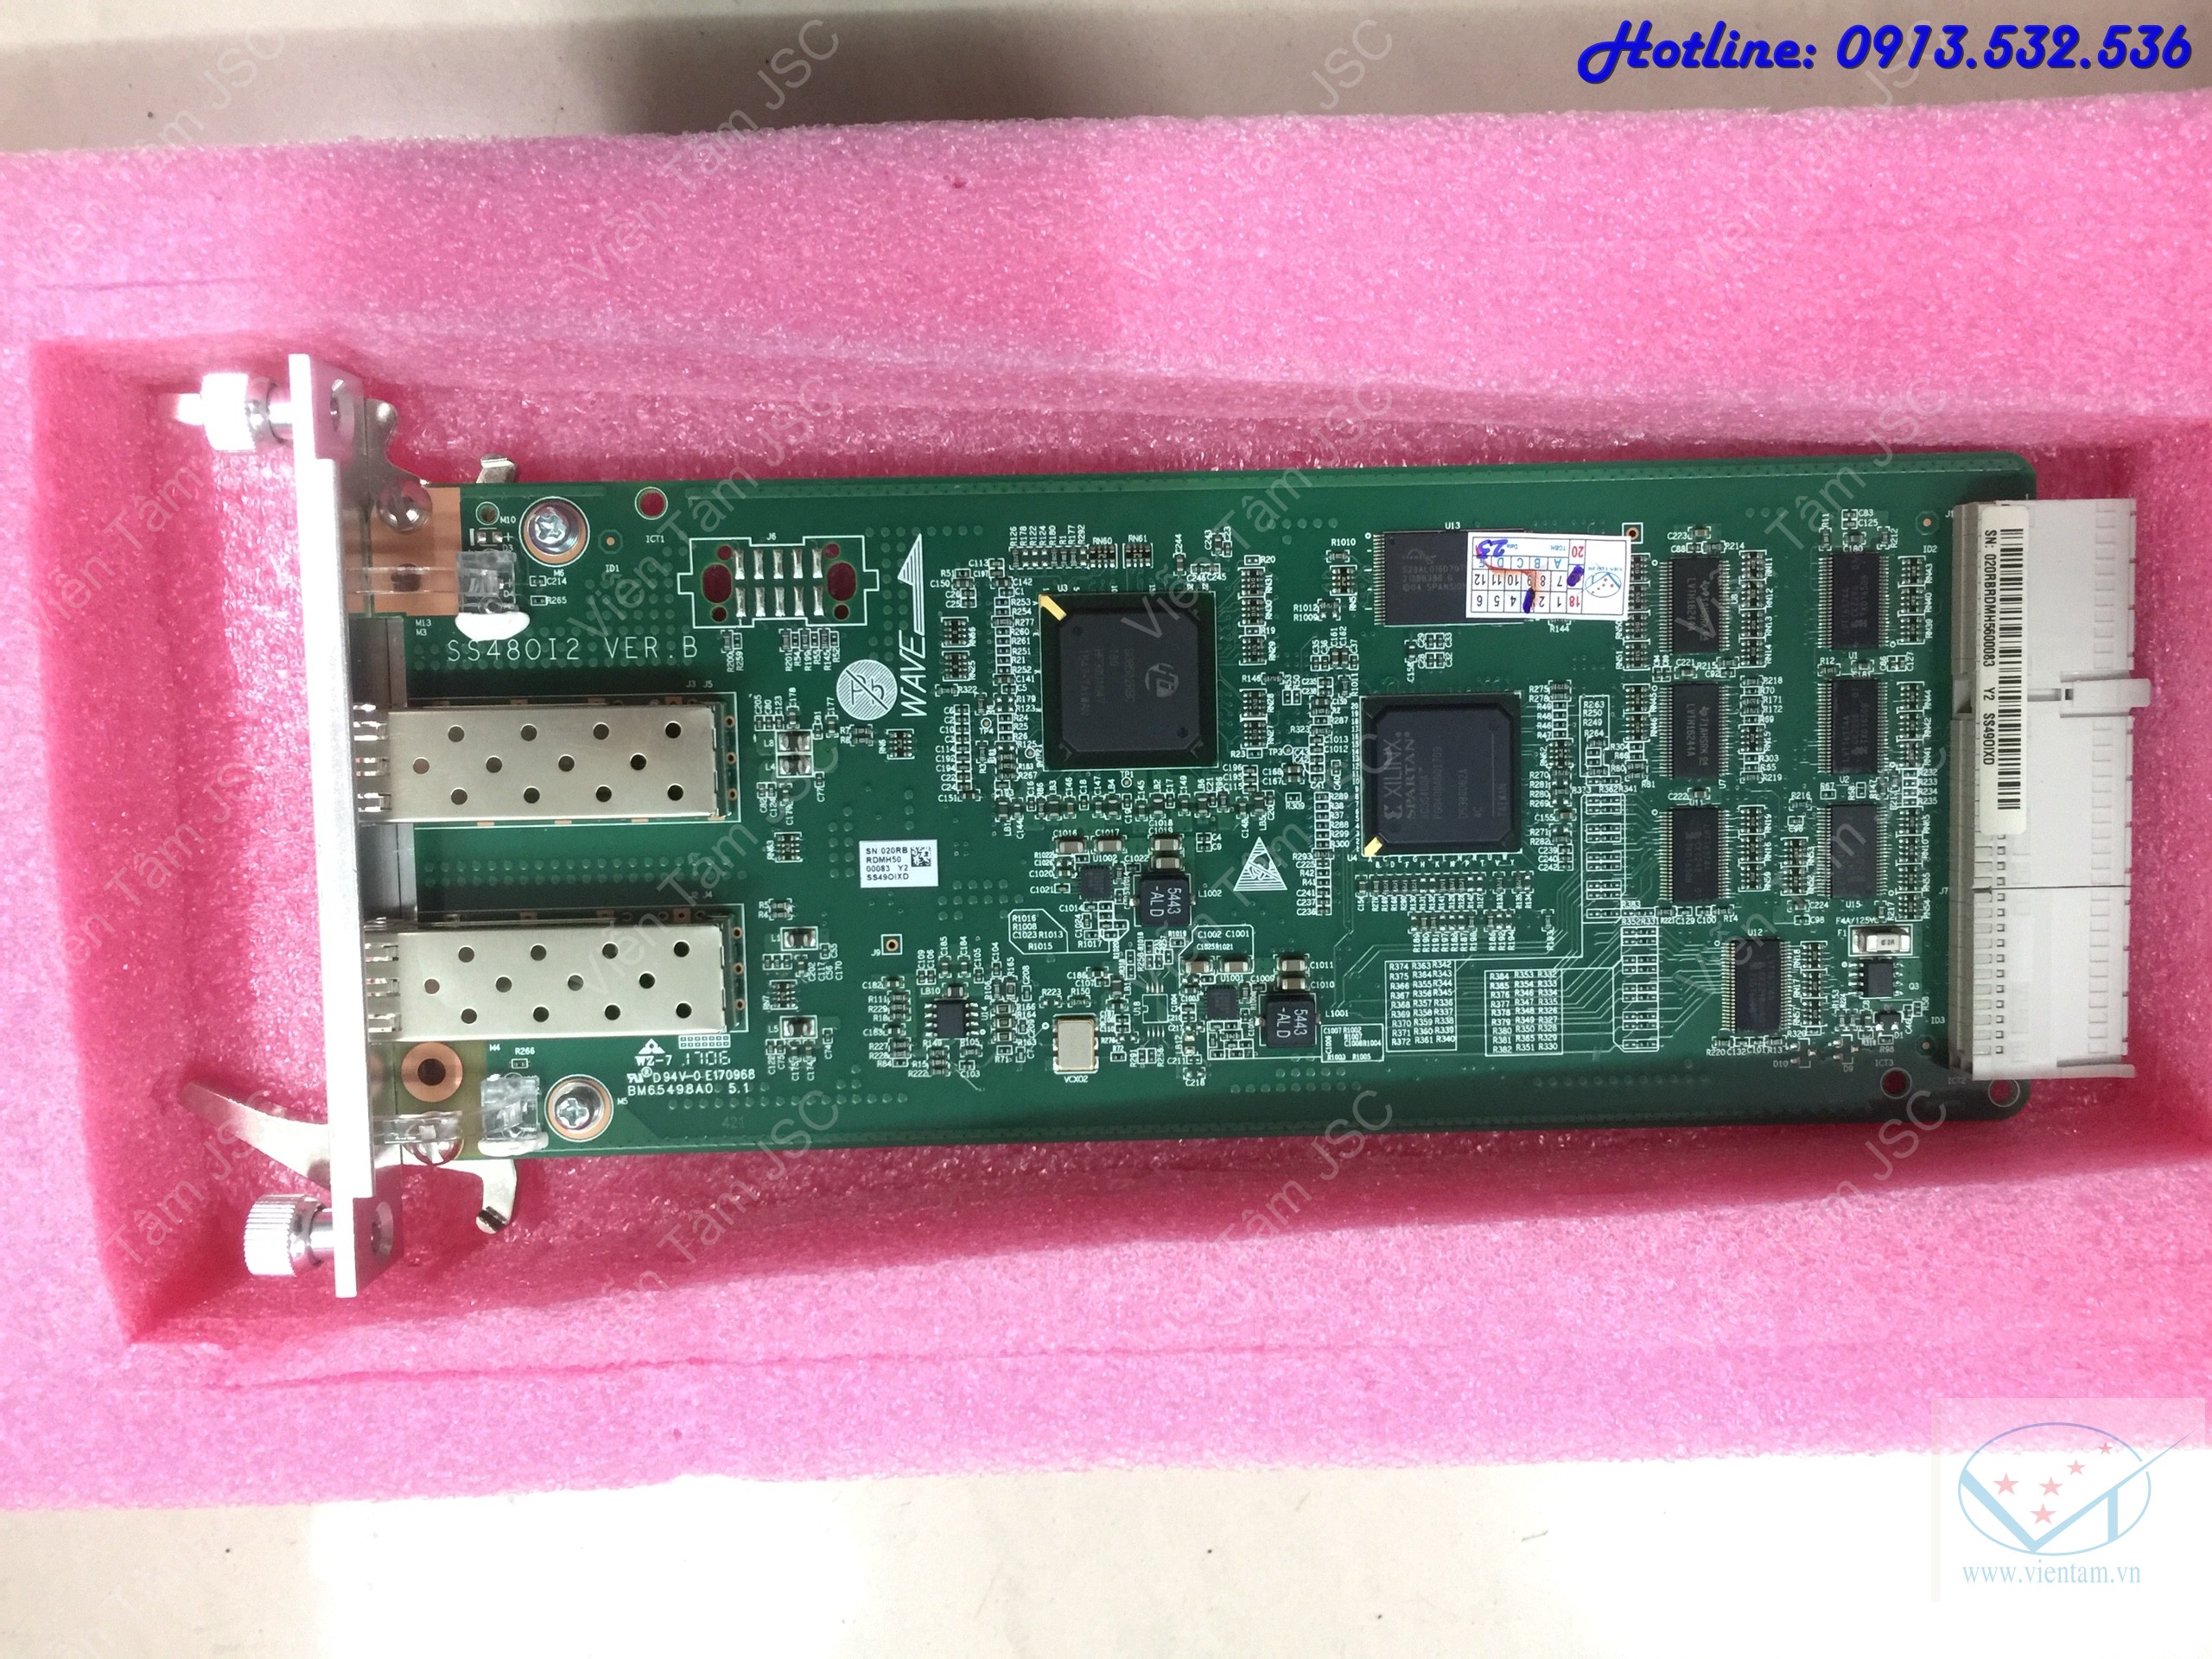 Card truyền dẫn quang Huawei OI2D